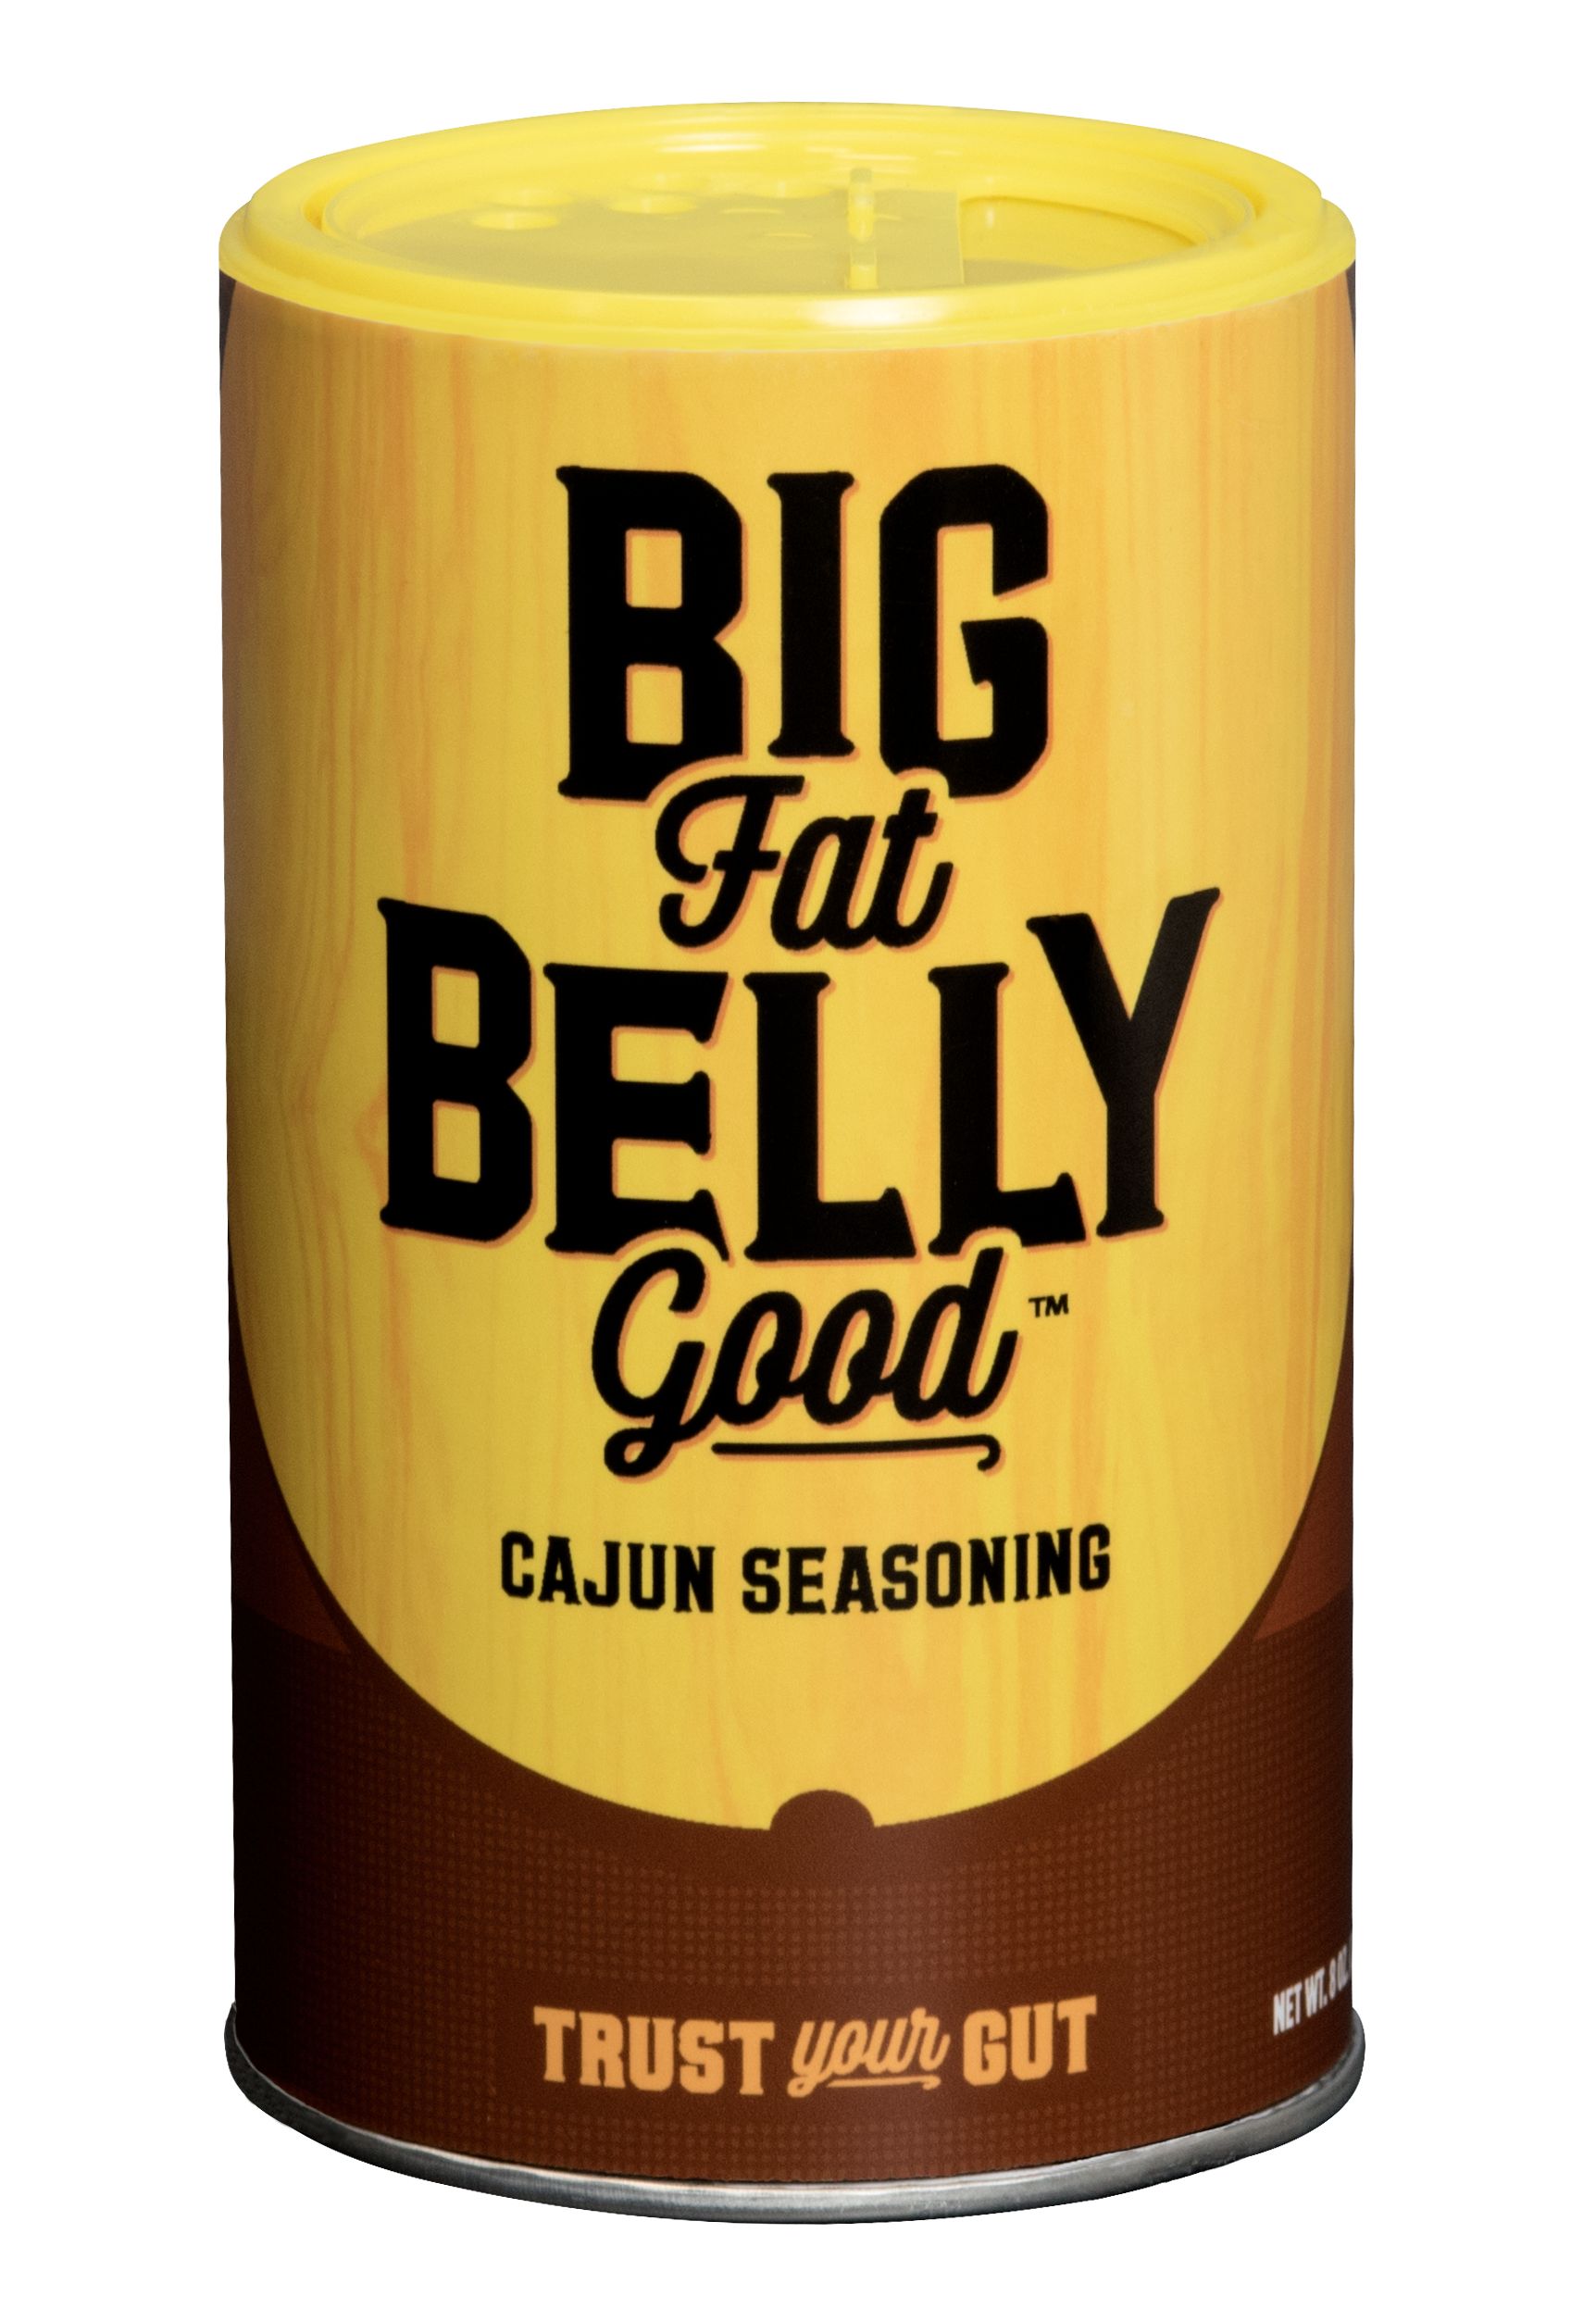 8oz. Original Big Fat Belly Good Cajun Seasoning Blend